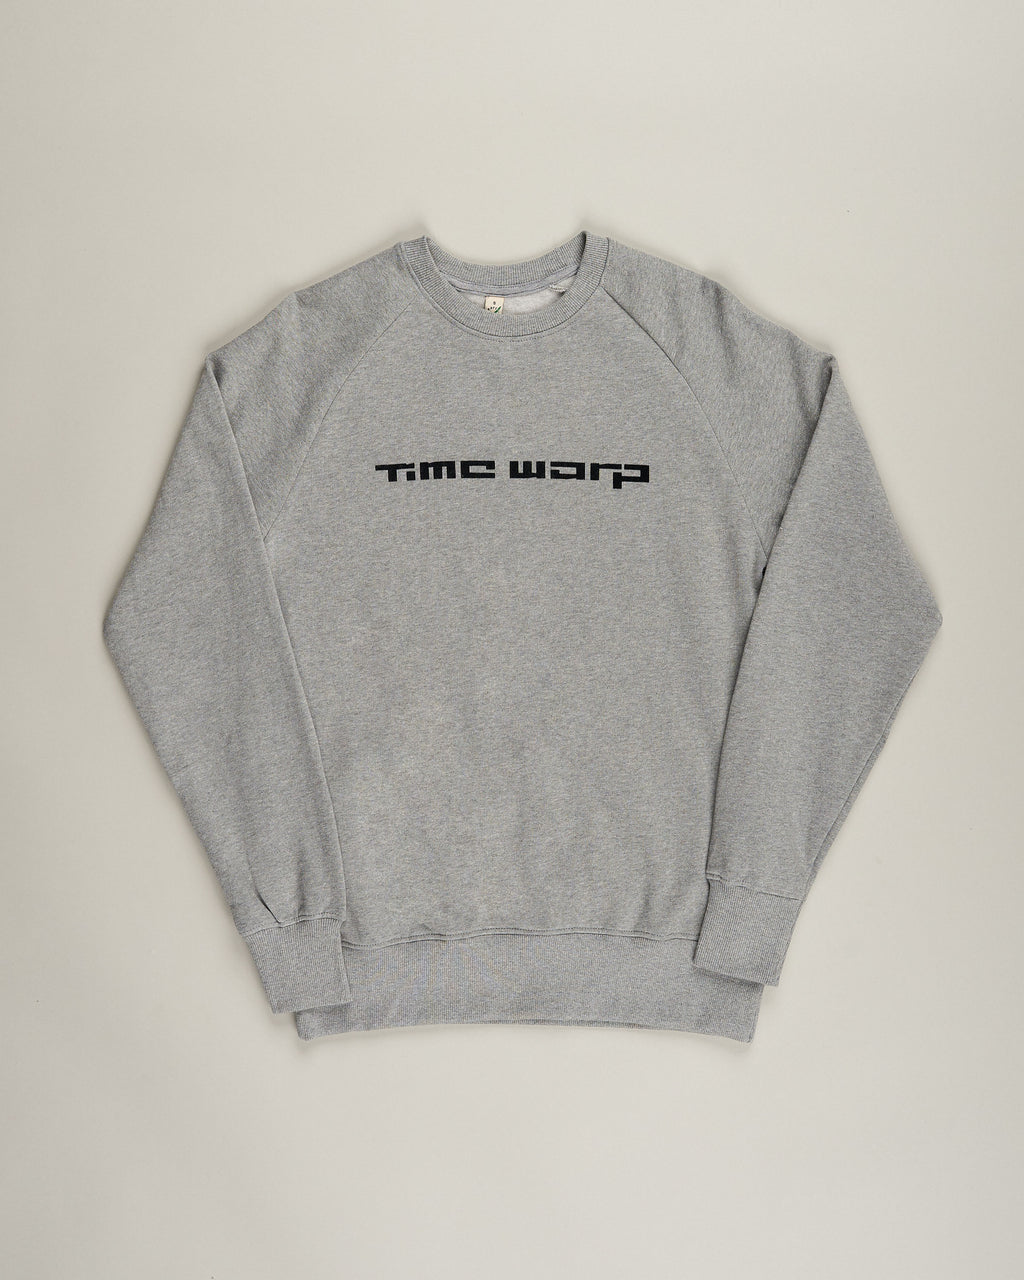 Time Warp Sweater, grey